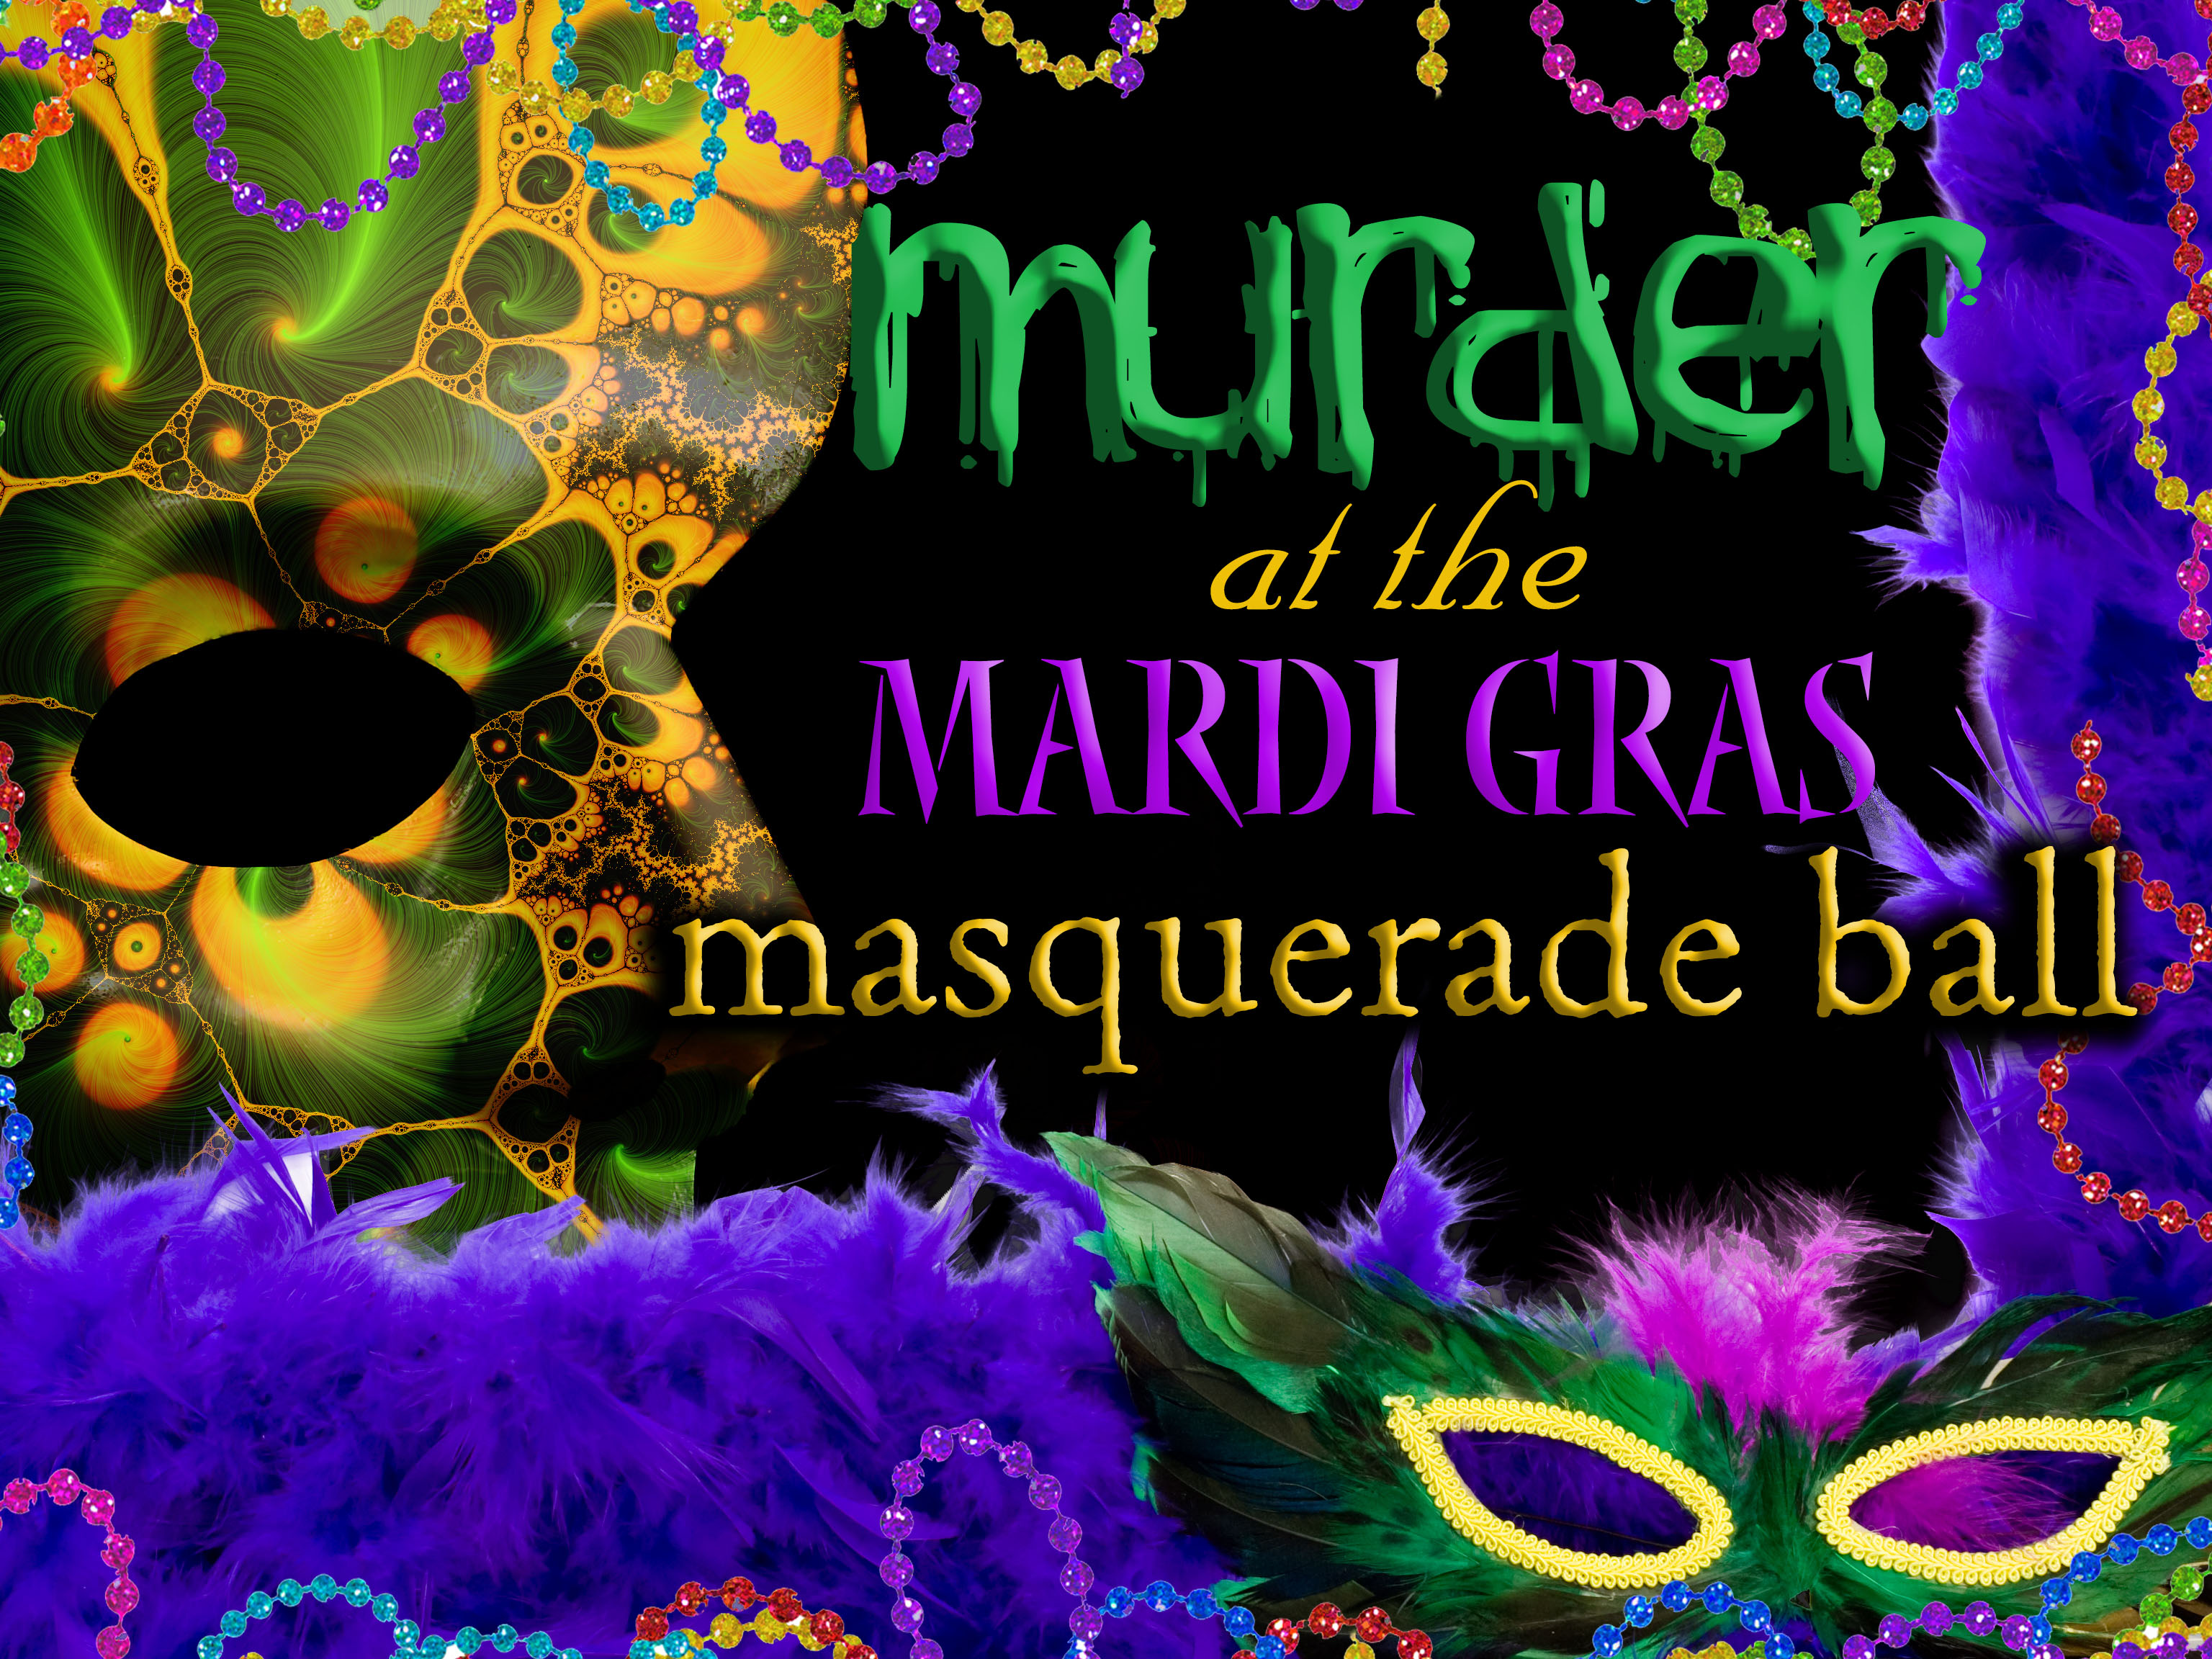 Murder at the Mardi Gras Masquerade Ball